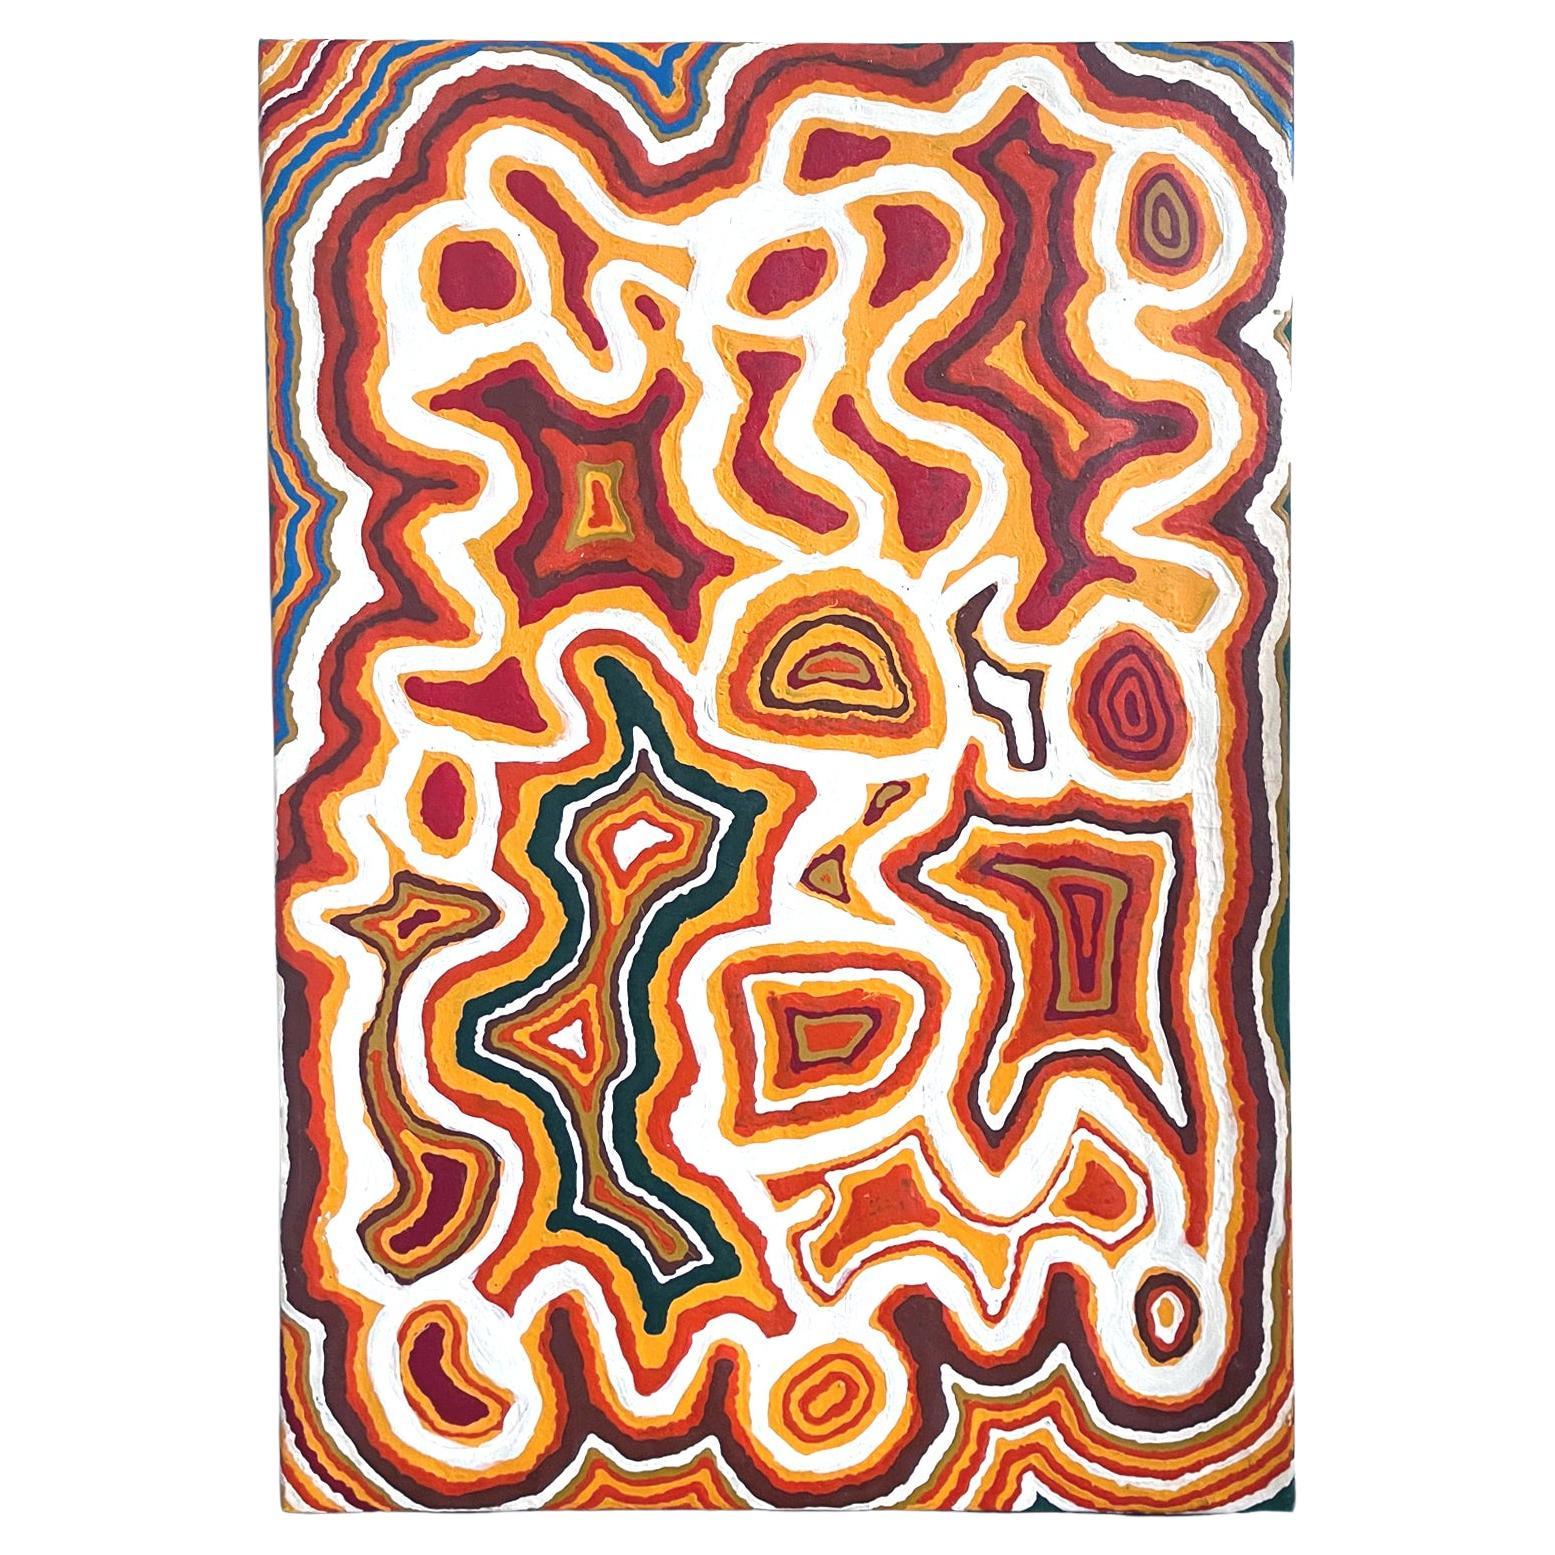 Australian Aboriginal Painting "Piari" by Ningie Nangala